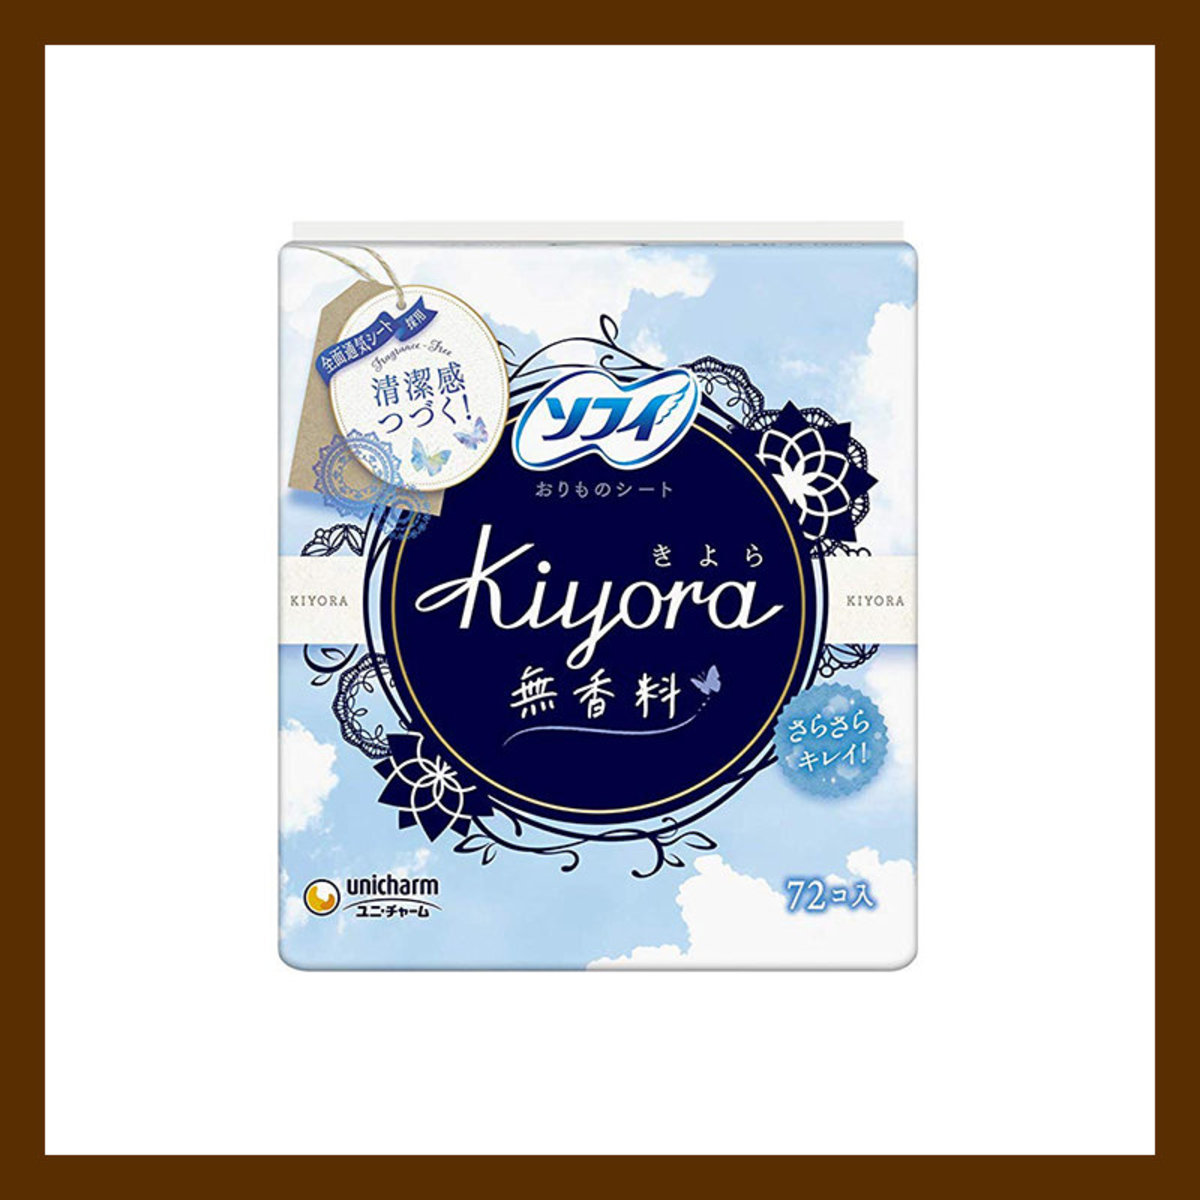 Kiyora Pantiliner (Fragrance Free) 72pcs  4903111375592 (Randomly Delivery)